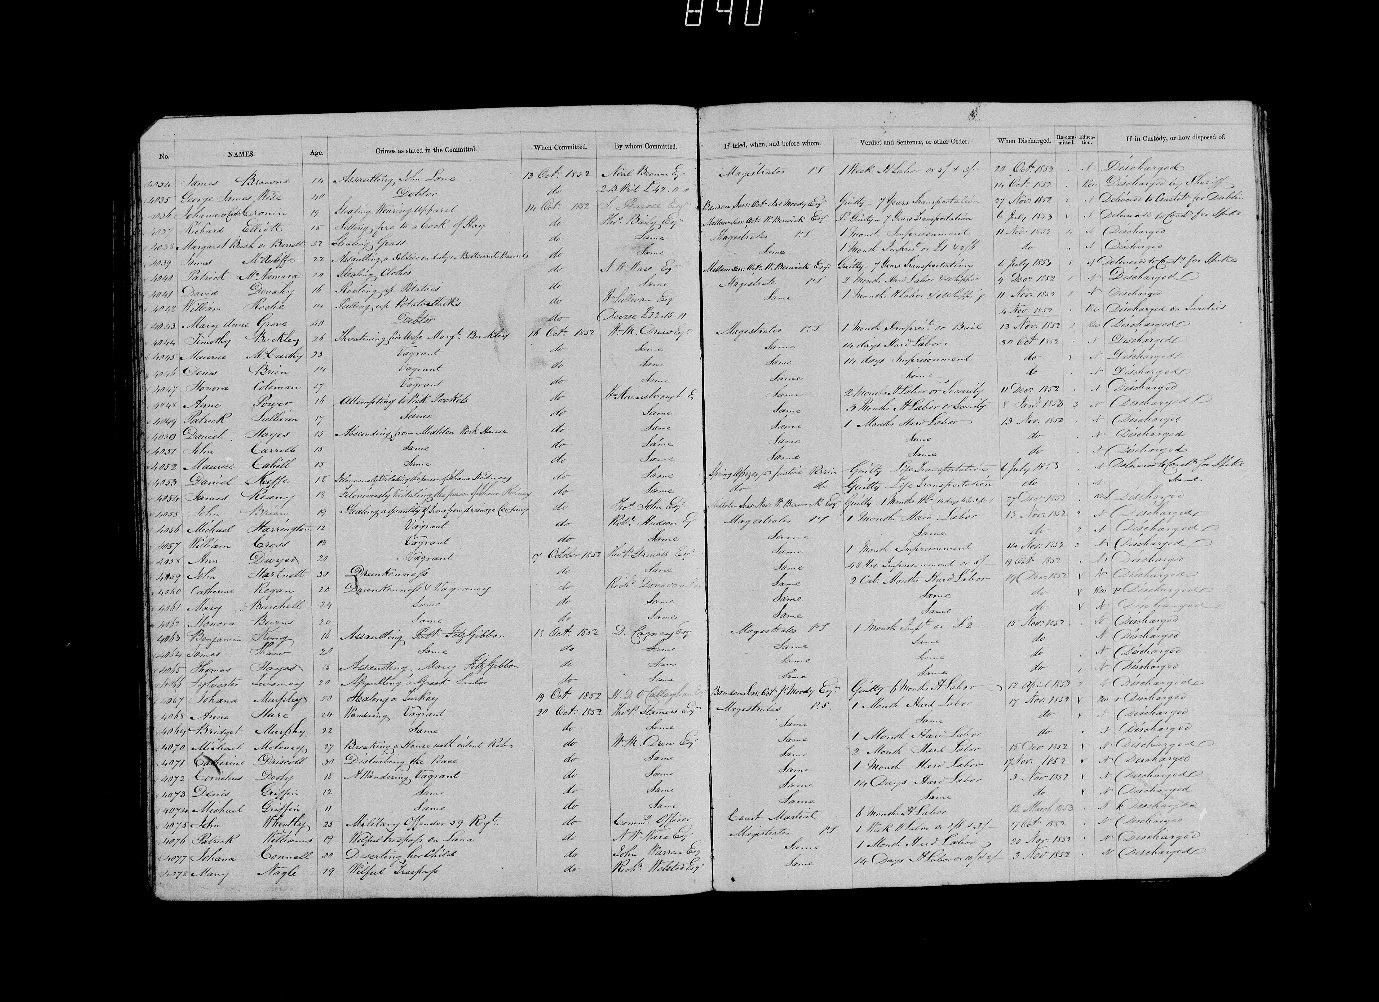 C:\Users\Virginia Rundle\Documents\Ancestry\Wise Files\Wises from Cork\George James Wise aged 40 Debtors Prison 13 Oct 1857.jpg